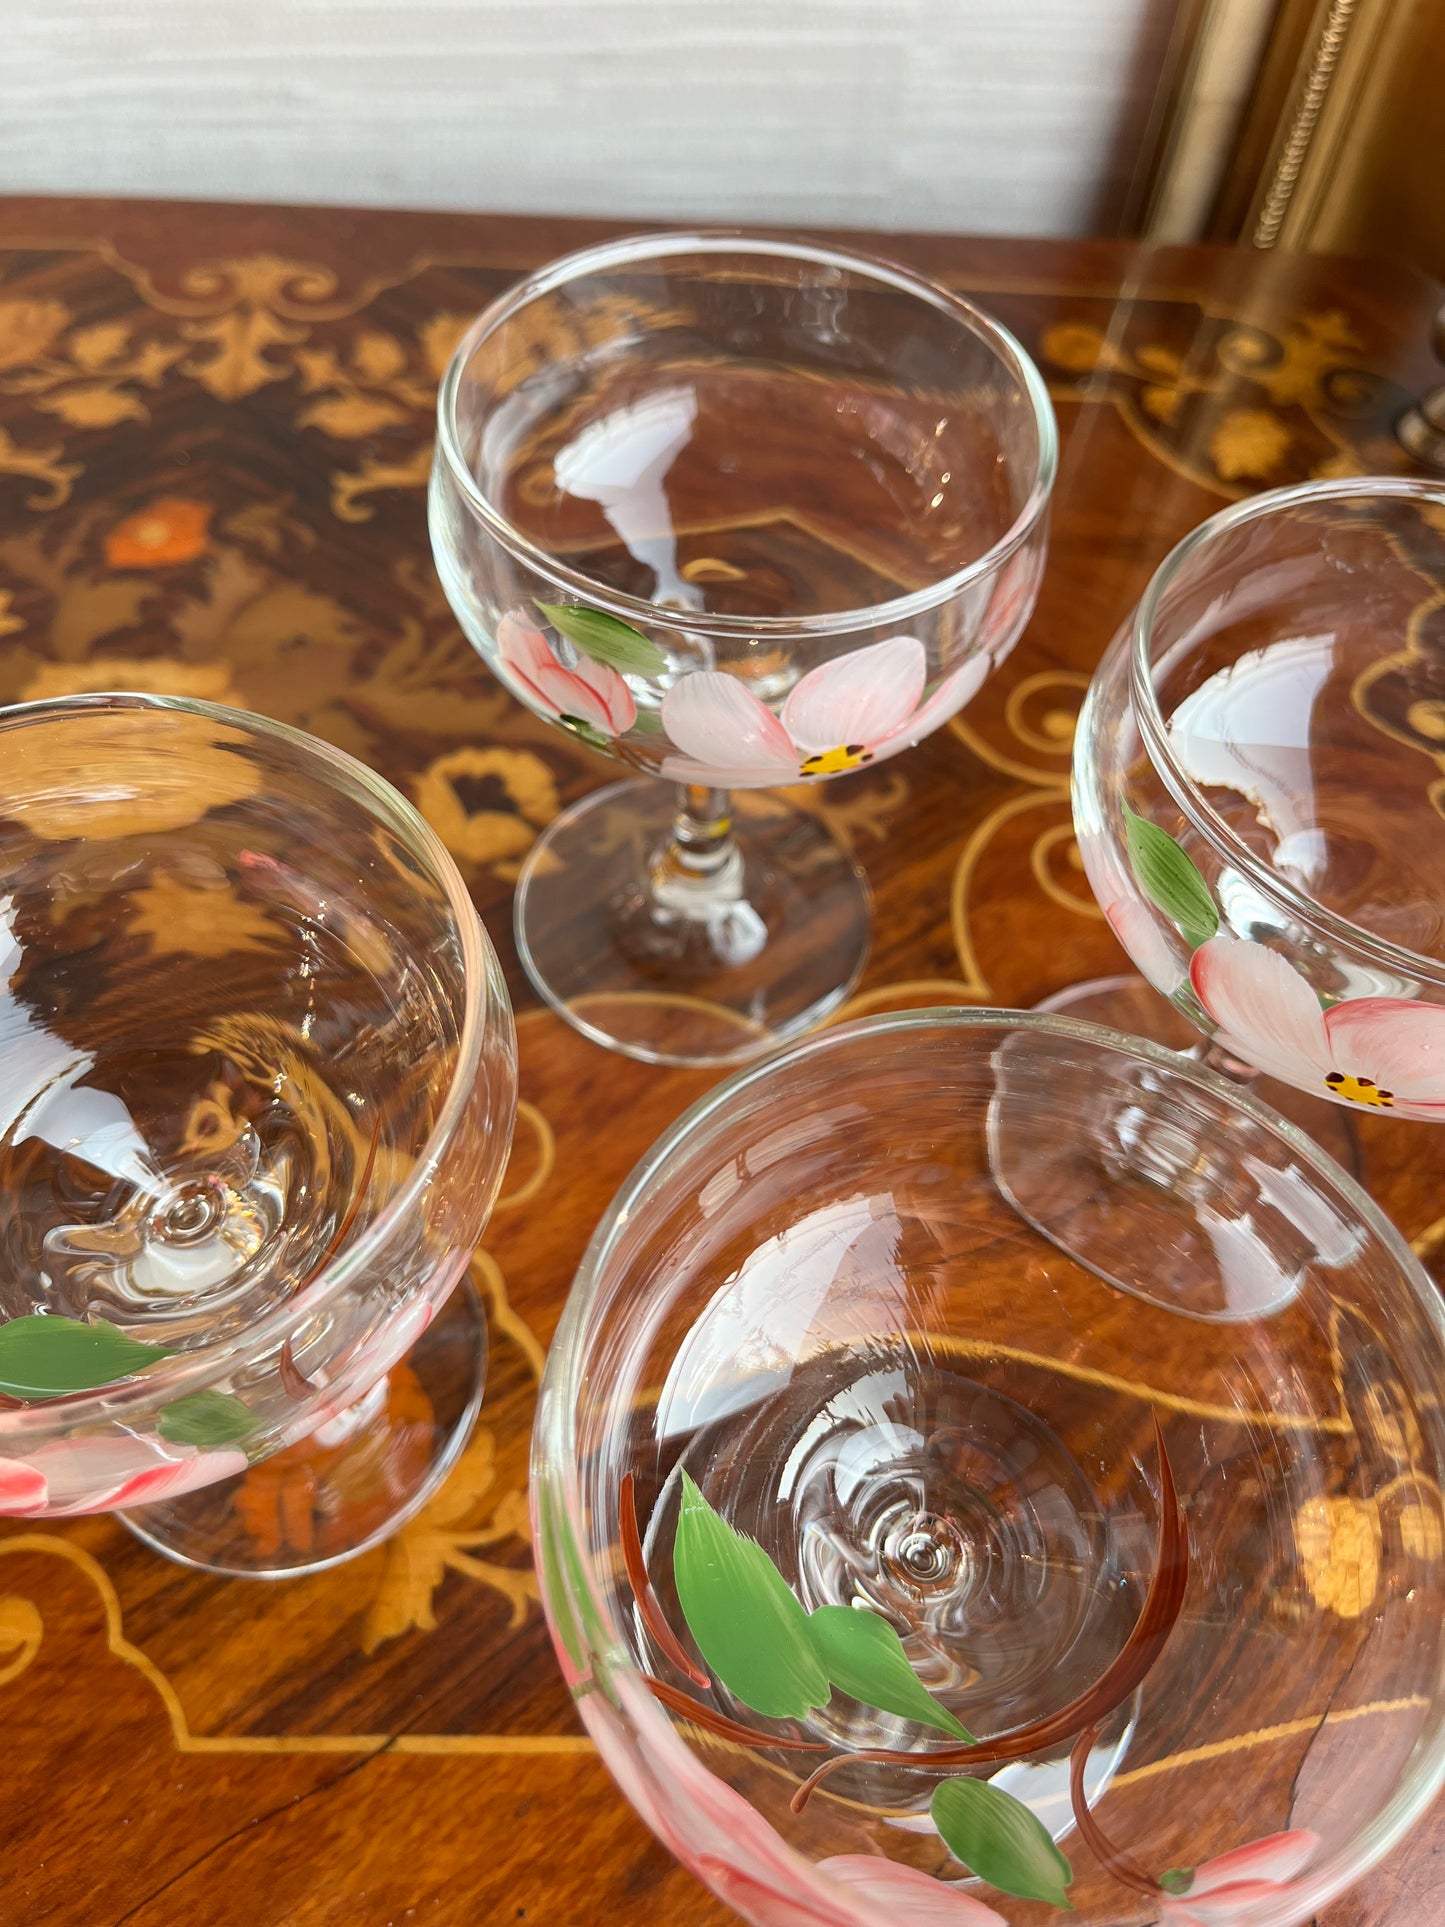 Vintage Hand Painted Pink Desert Rose Franciscan Champagne Sherbet Coupe Glasses Set of 4